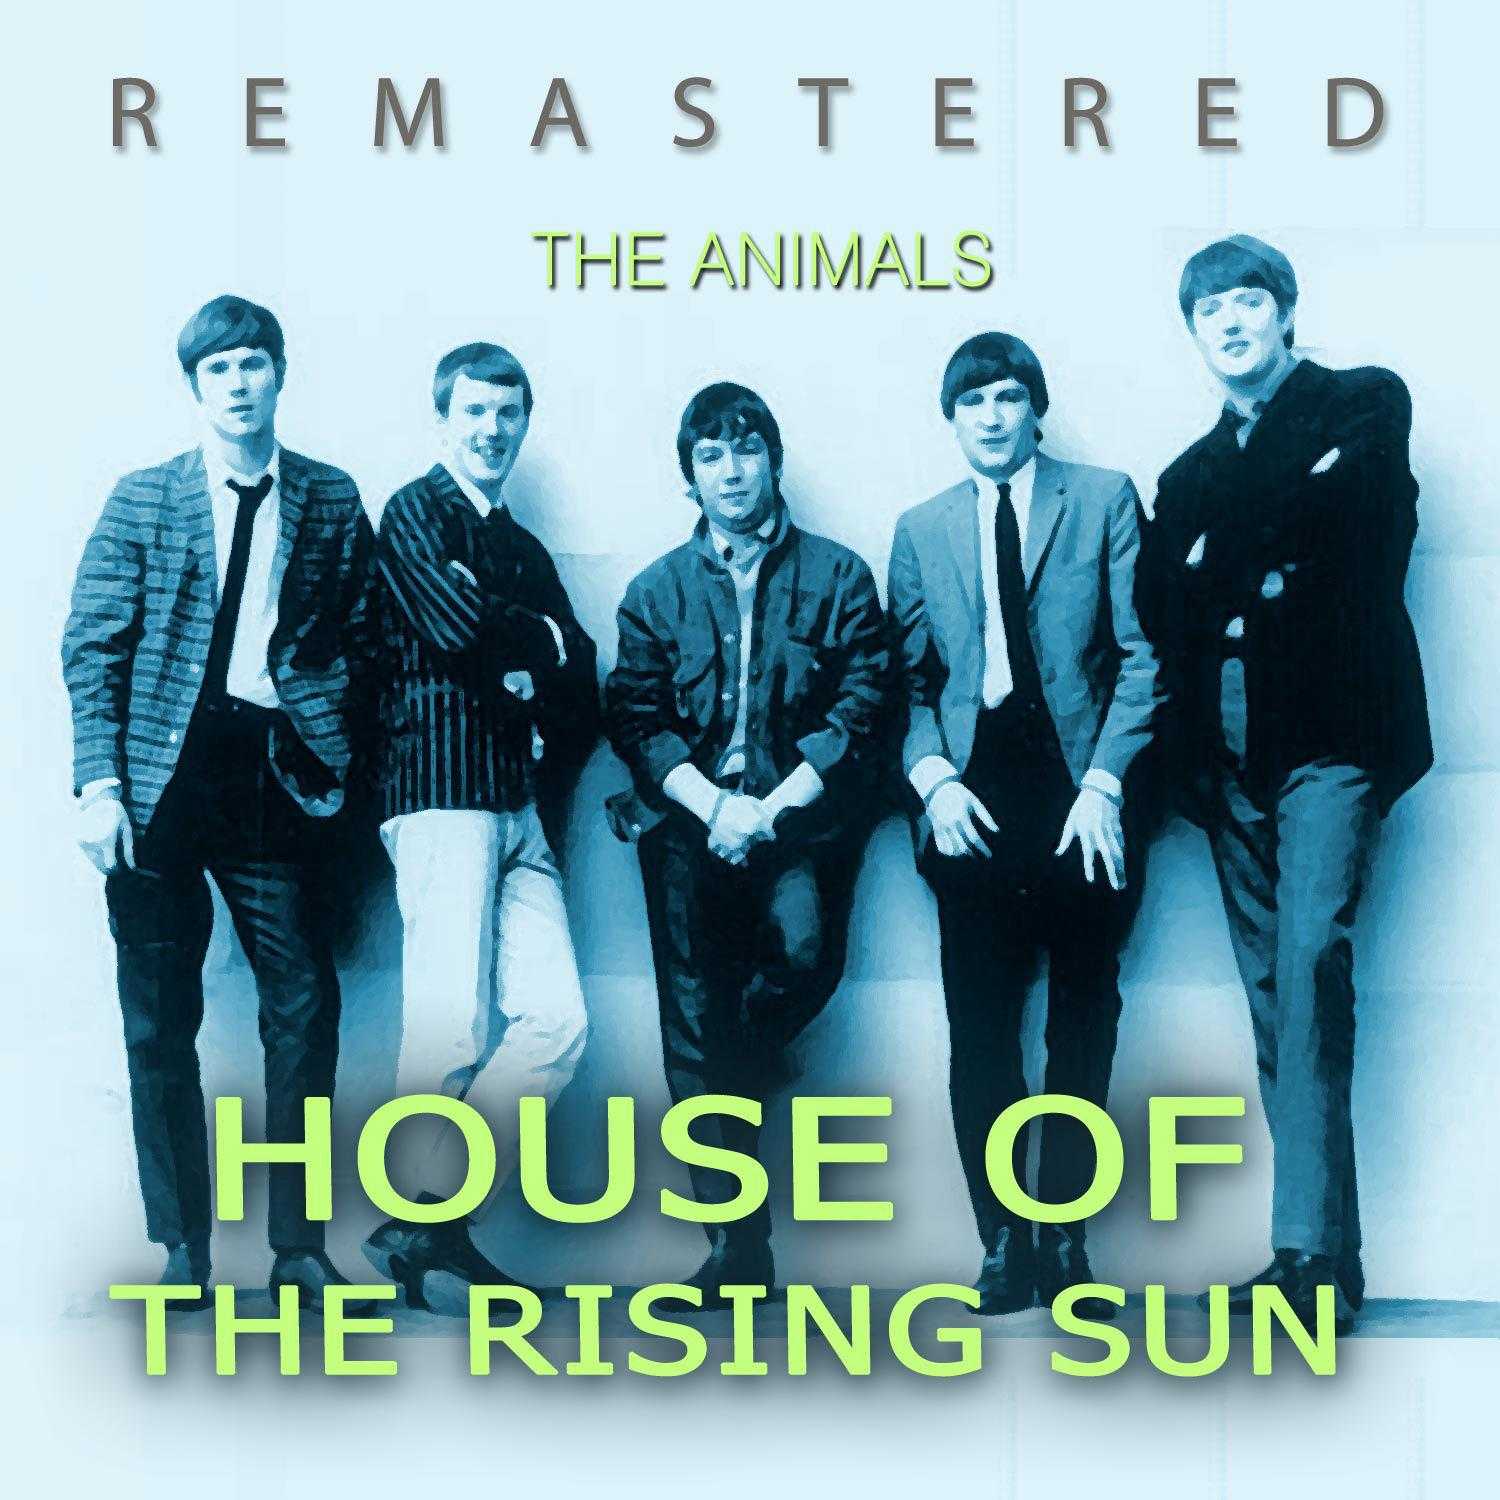 Энималс слушать дом. Animals the House of the Rising Sun альбом. The animals House of the Rising Sun обложка. Animal House. Группа the animals дом восходящего солнца.